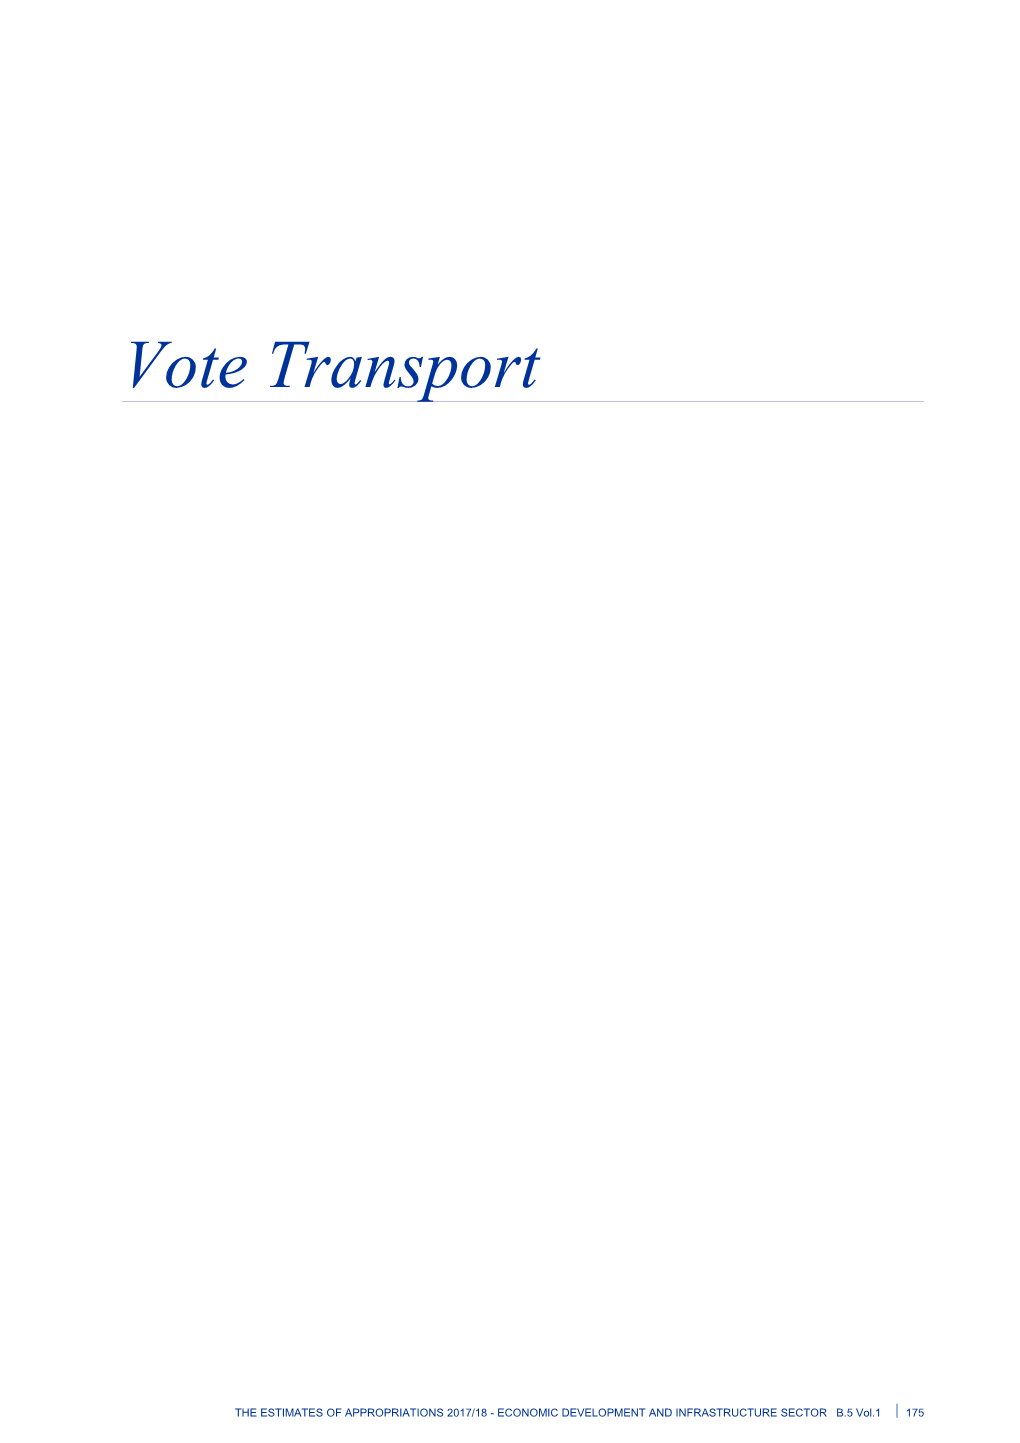 Vote Transport - Vol 1 Economic Development and Infrastructure Sector - the Estimates Of